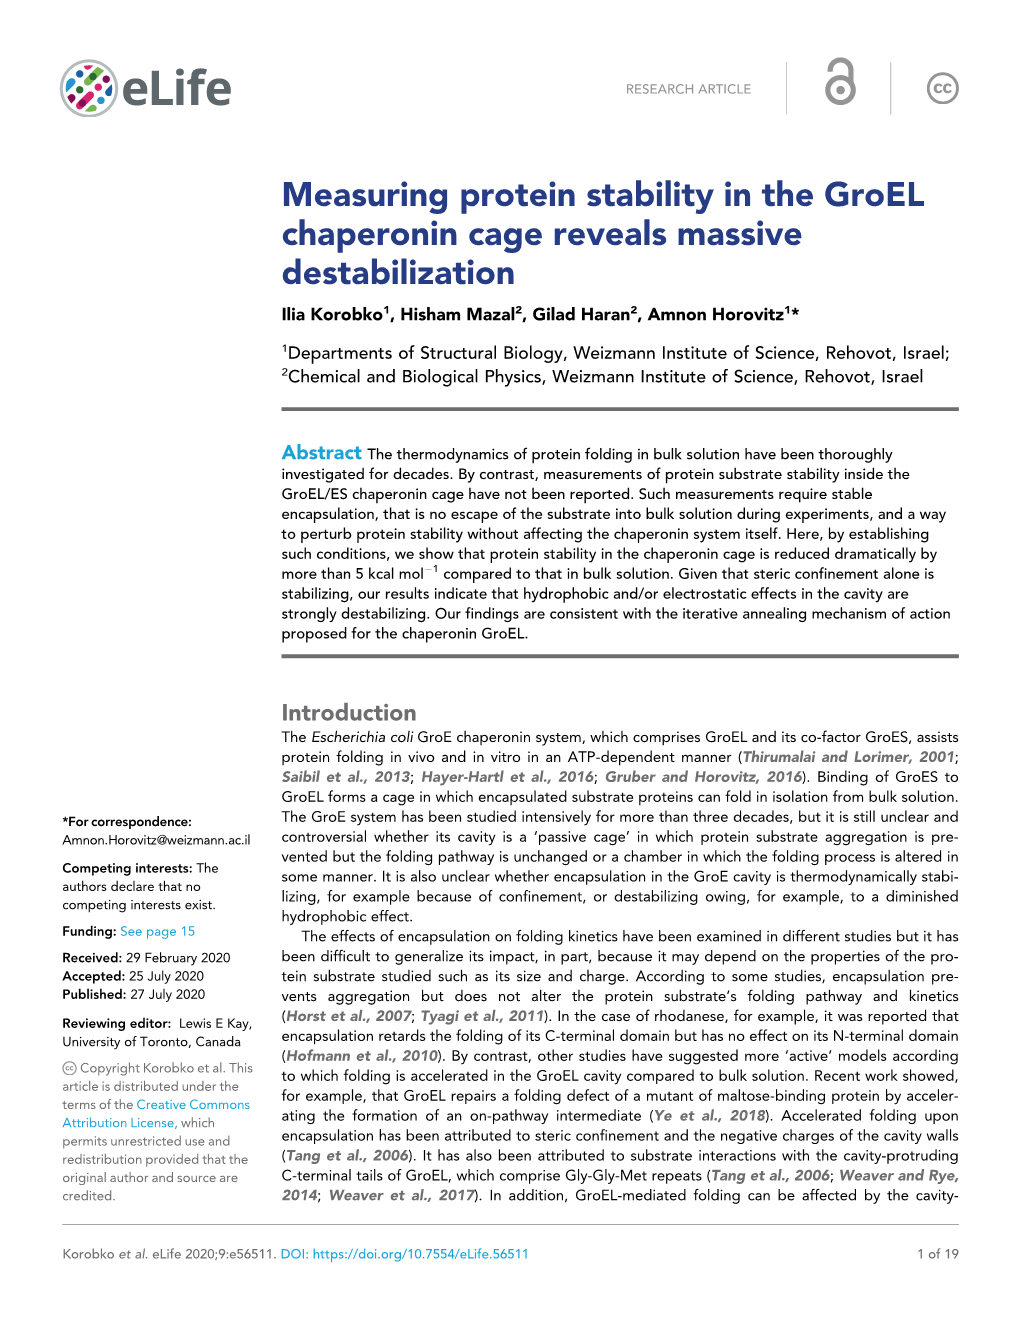 Measuring Protein Stability in the Groel Chaperonin Cage Reveals Massive Destabilization Ilia Korobko1, Hisham Mazal2, Gilad Haran2, Amnon Horovitz1*